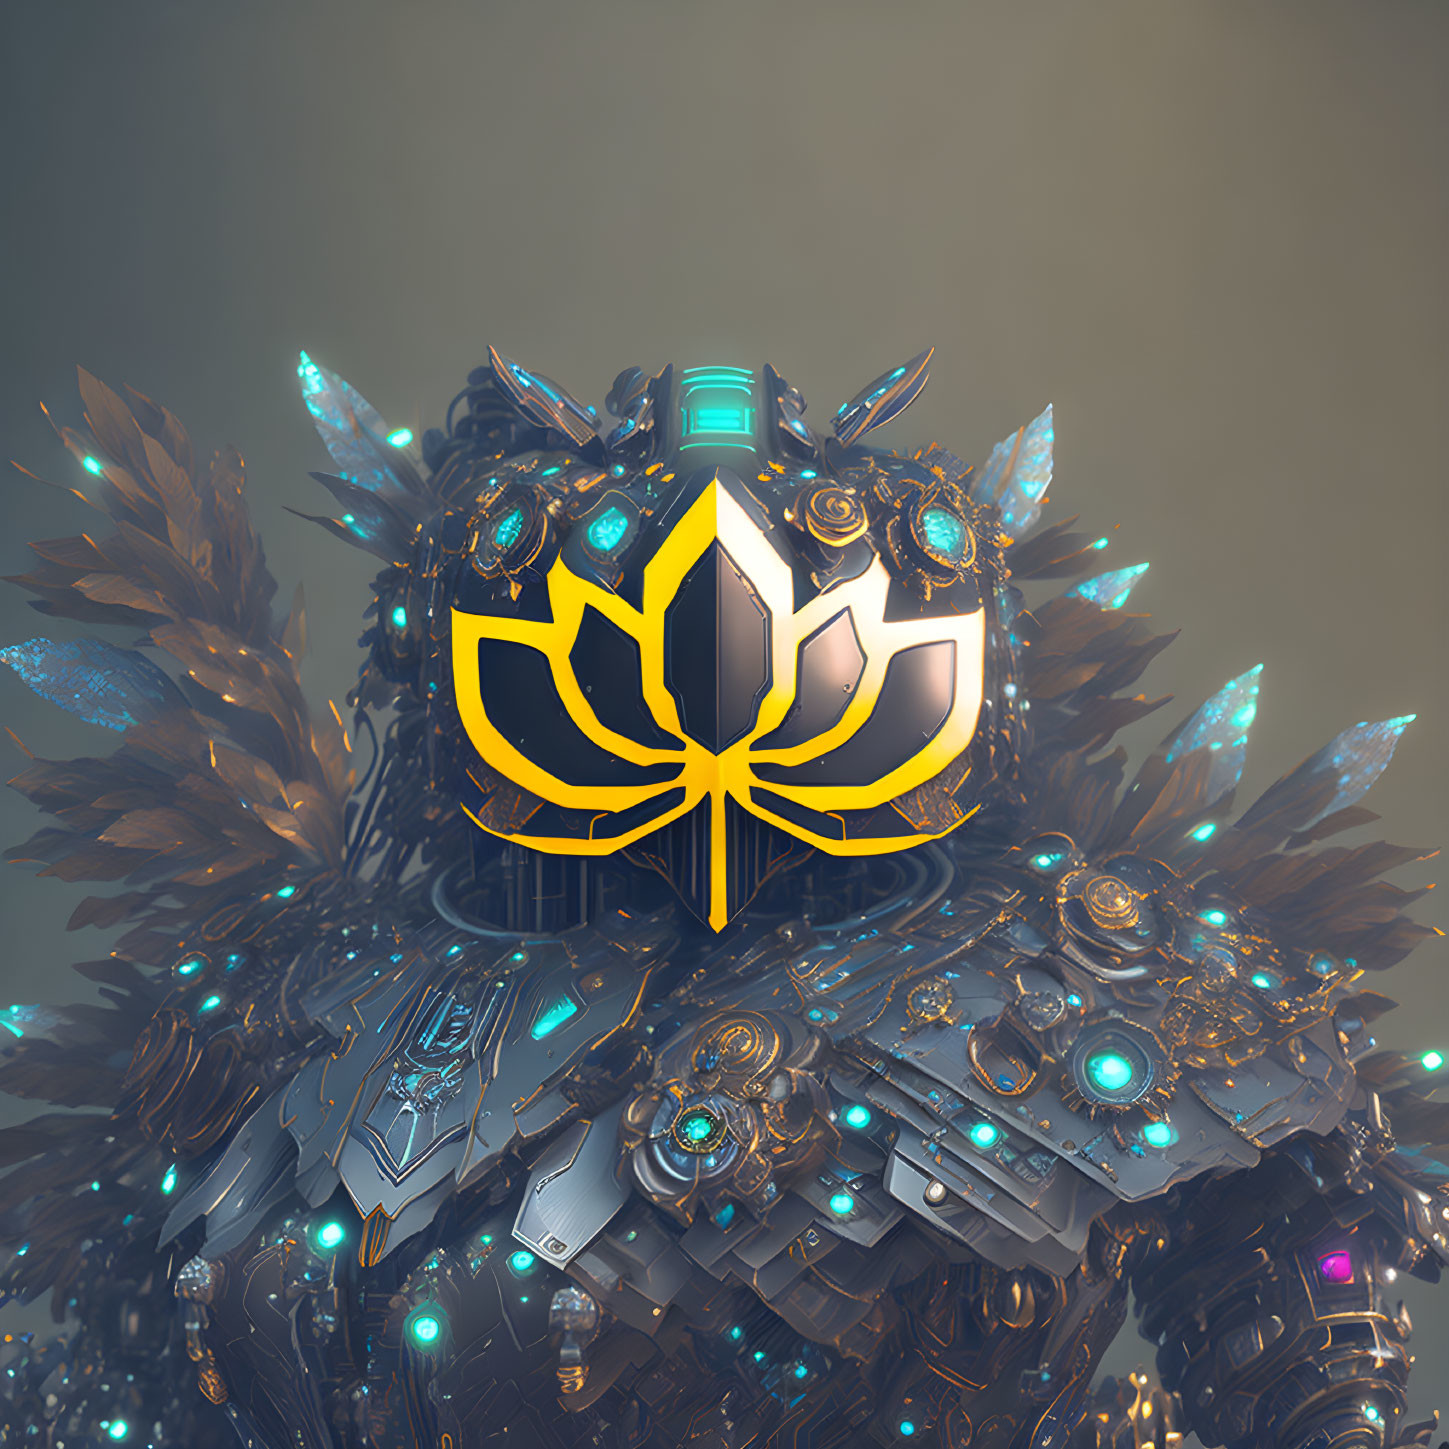 a new minimalist logo with Lotus symbol